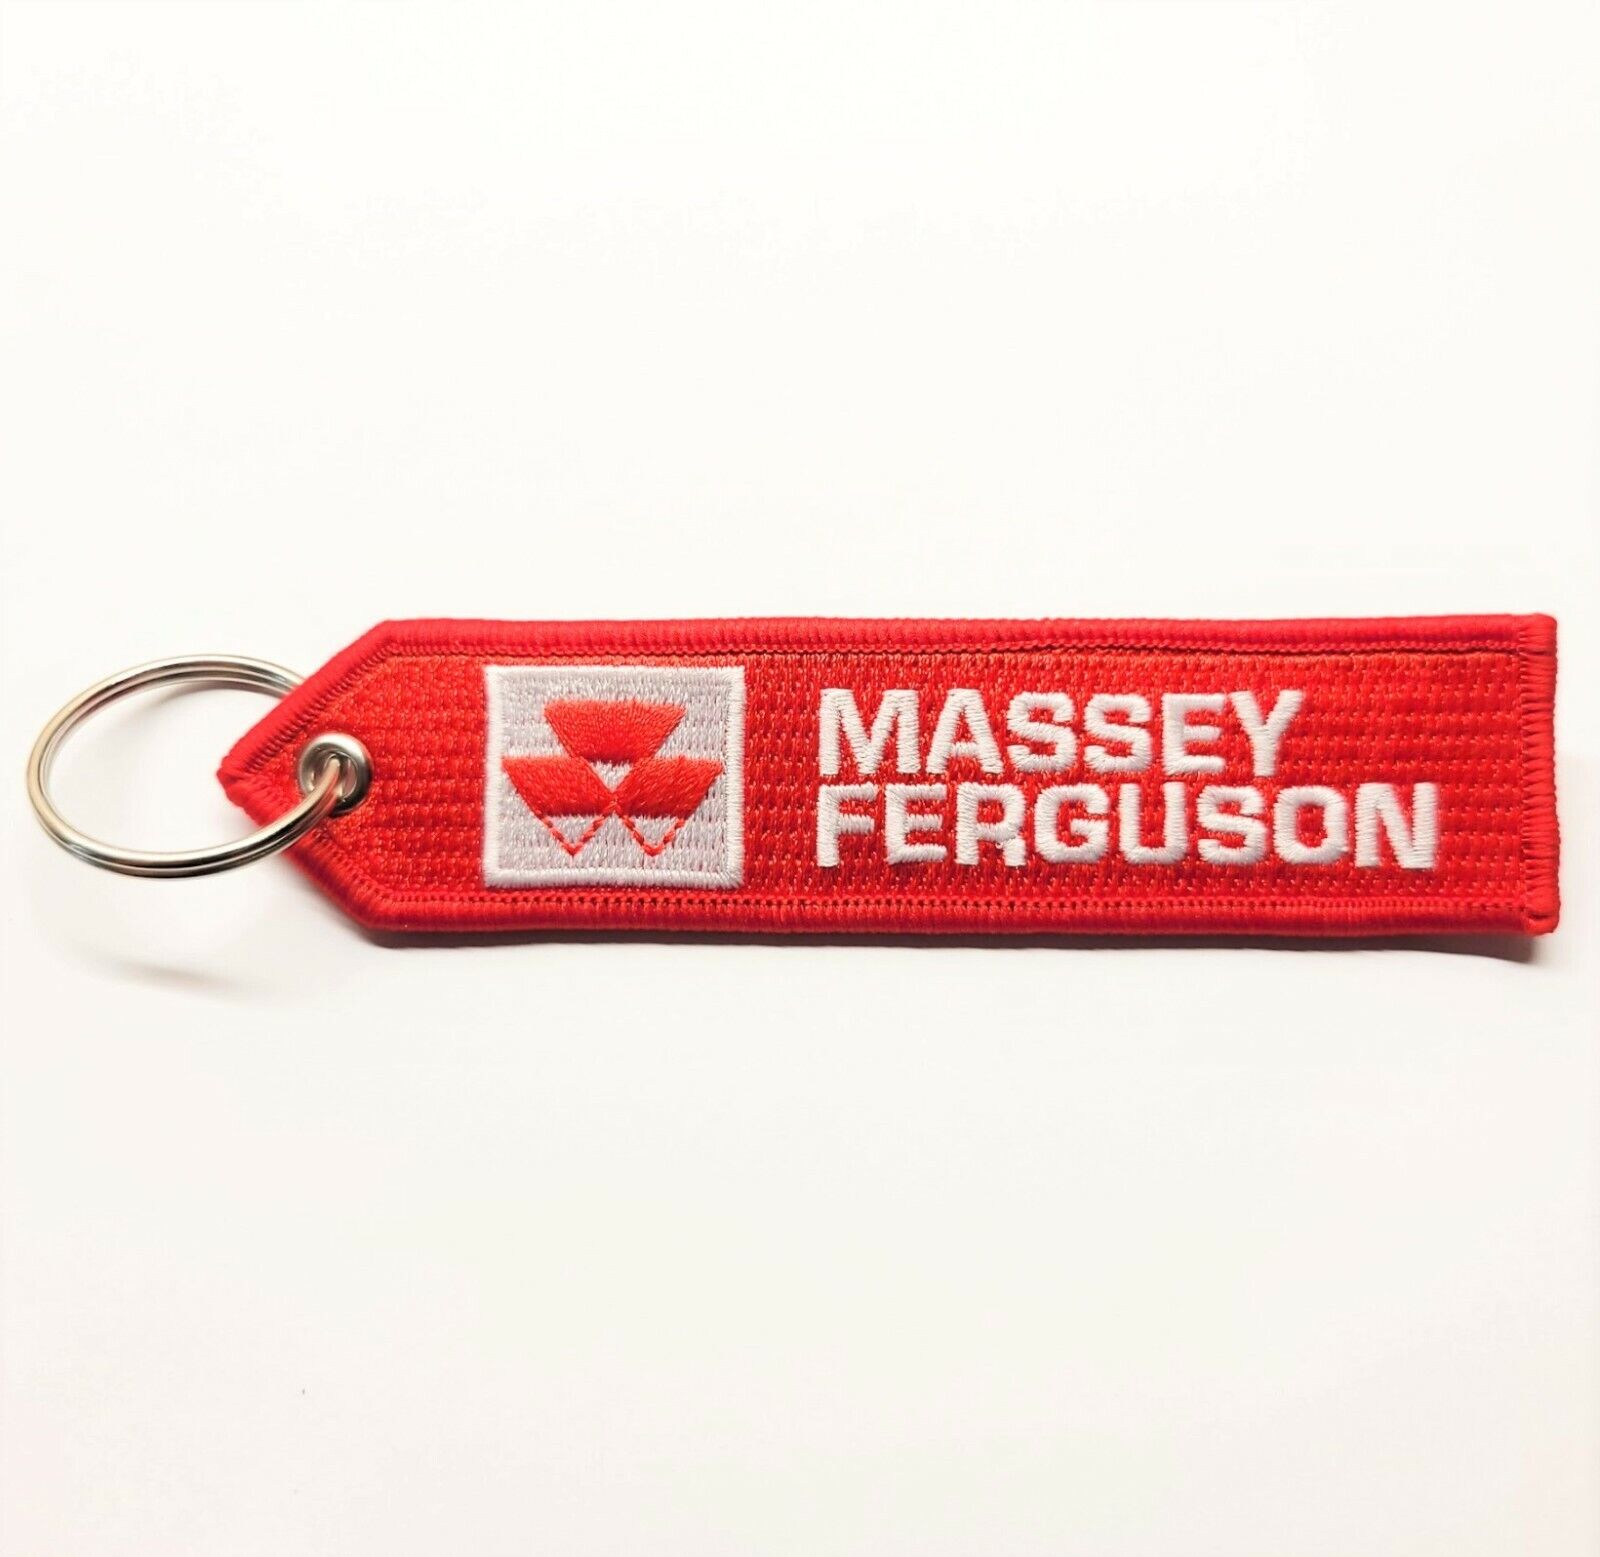 Massey Ferguson Keychain Highest Quality Double Sided Embroider Fabric 1PC USA